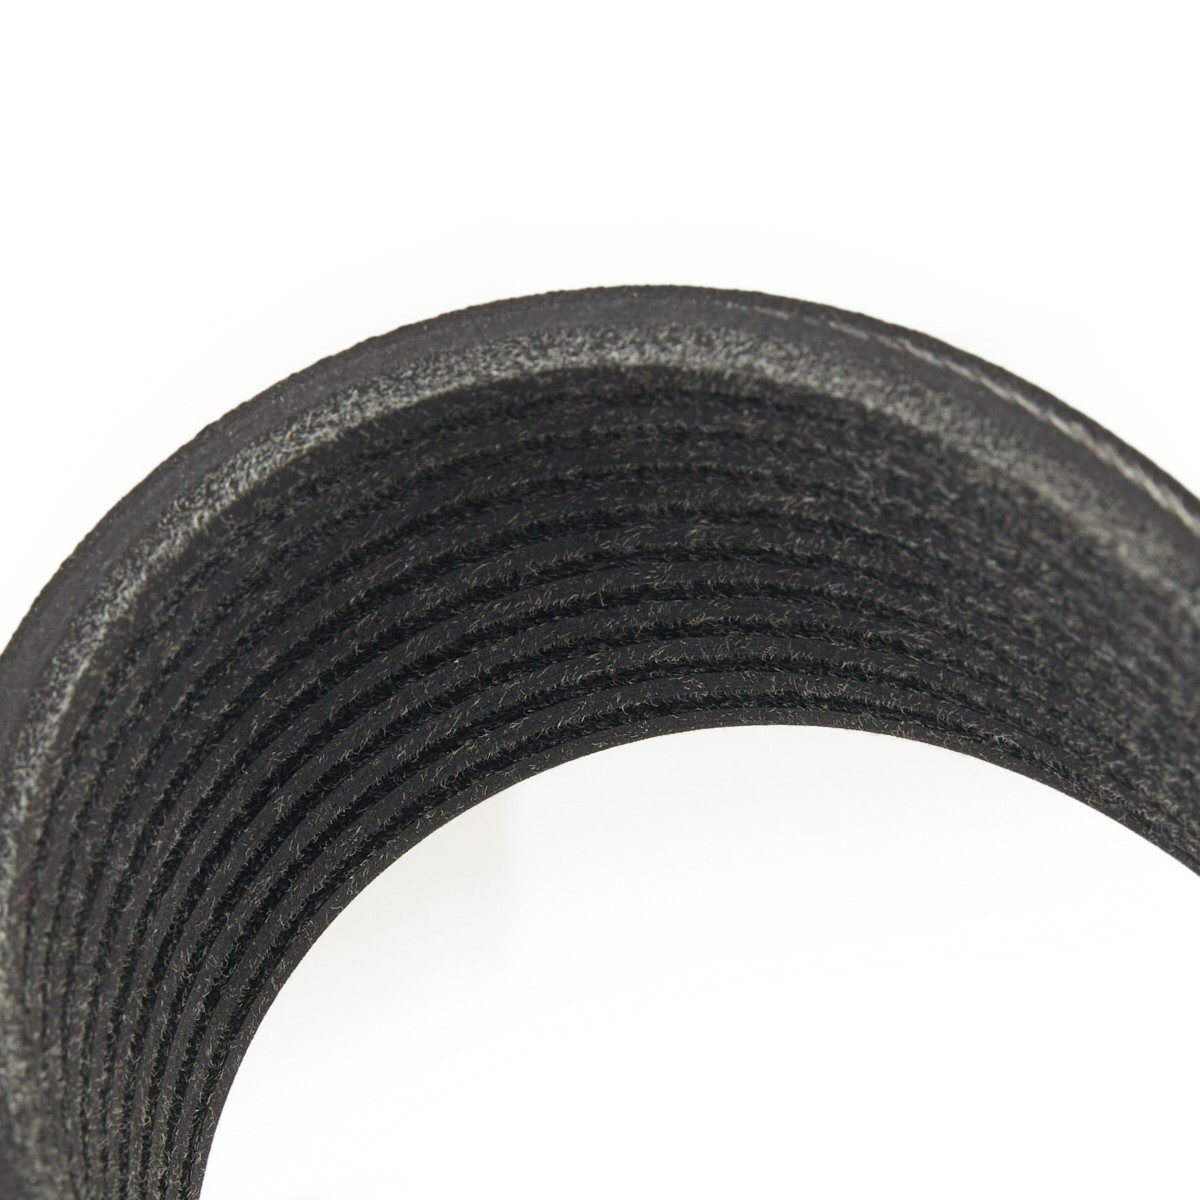 RIDEX 305P0465 Aux belt 1342mm, 10, EPDM (ethylene propylene diene Monomer (M-class) rubber)